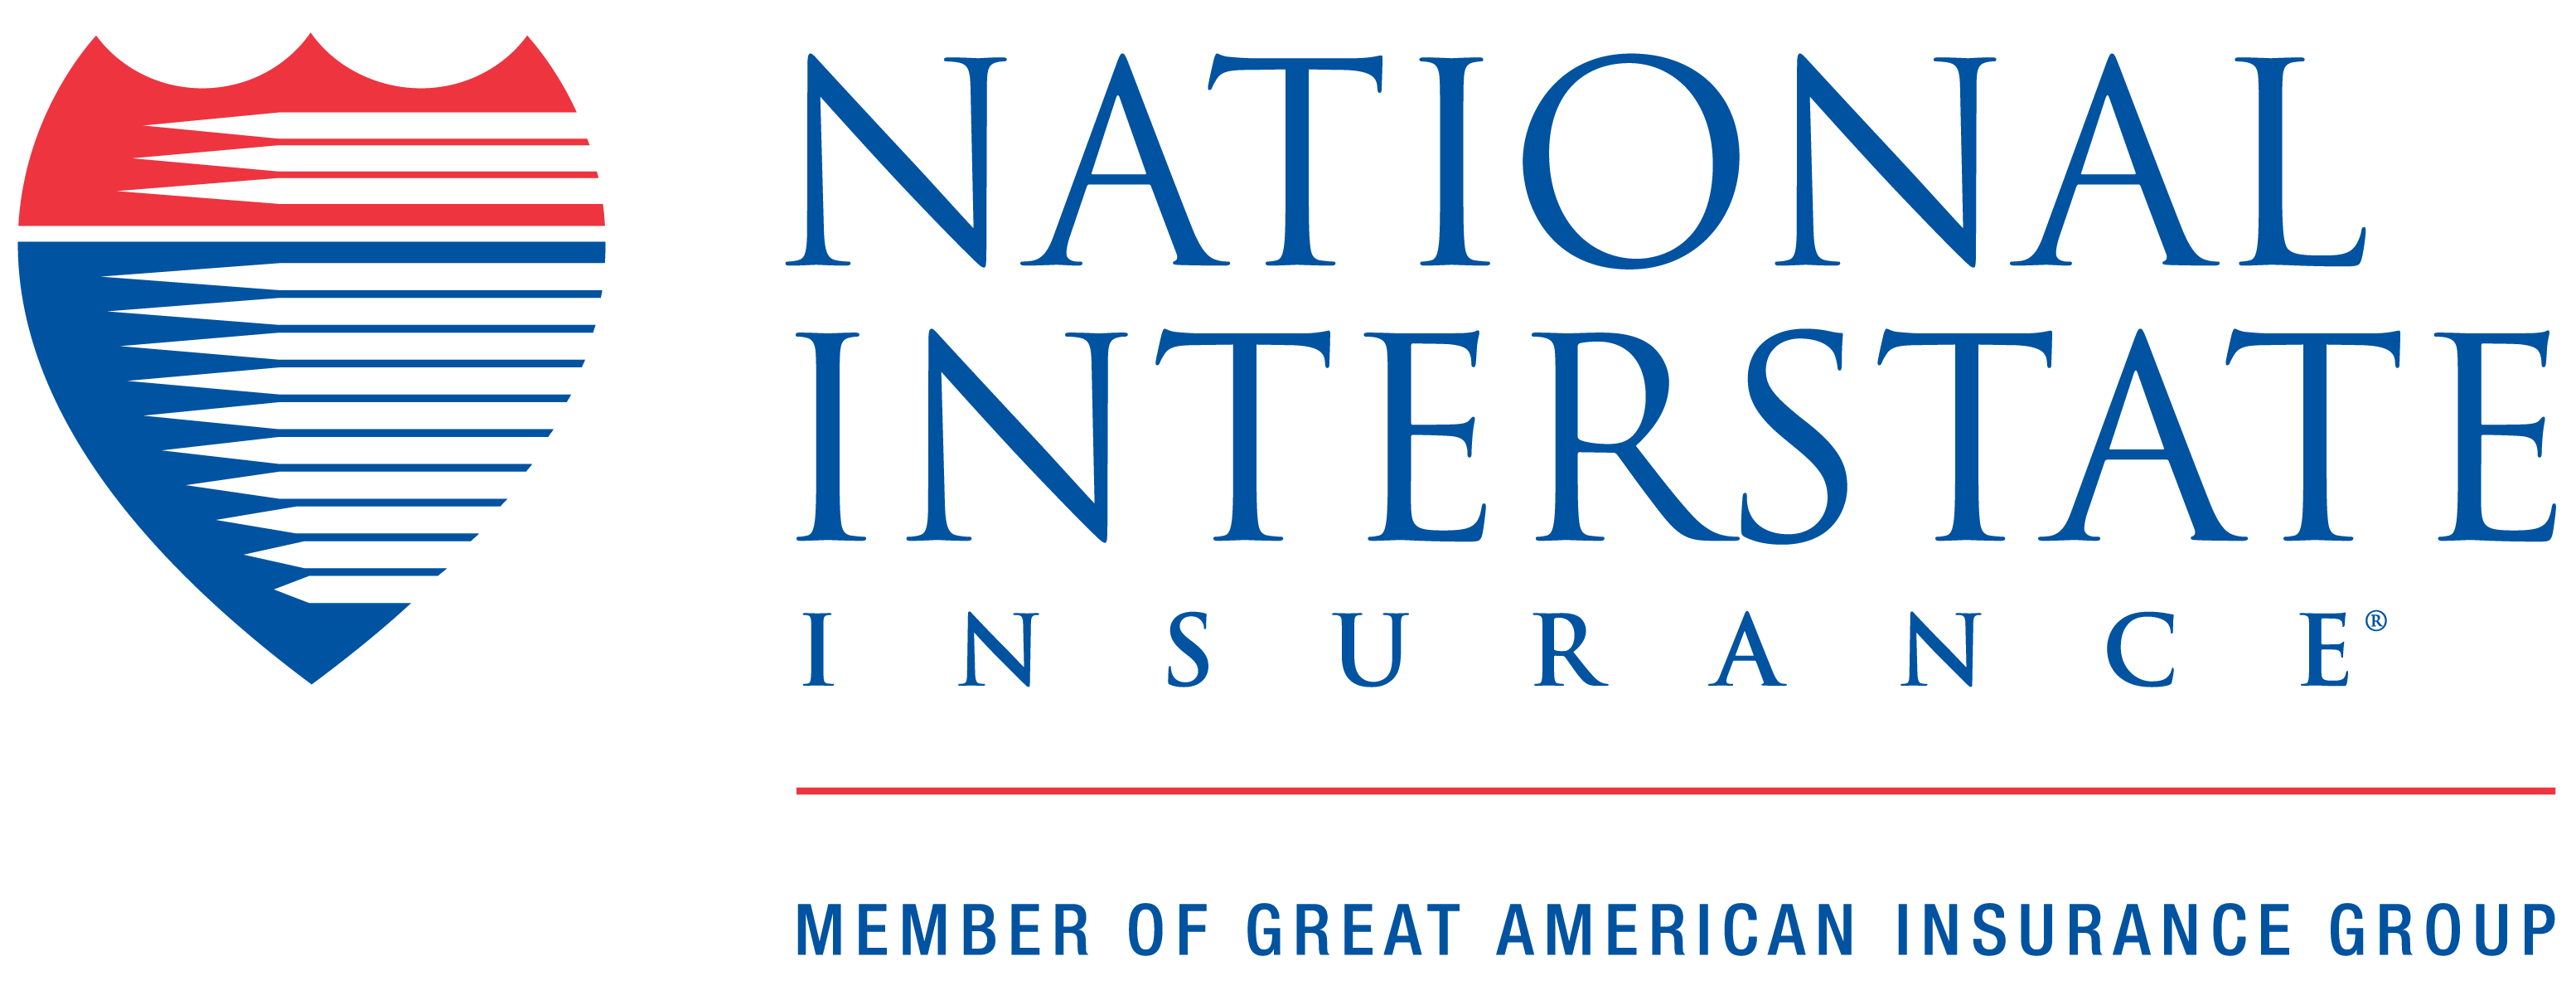 National Interstate Insurance Company Company Logo